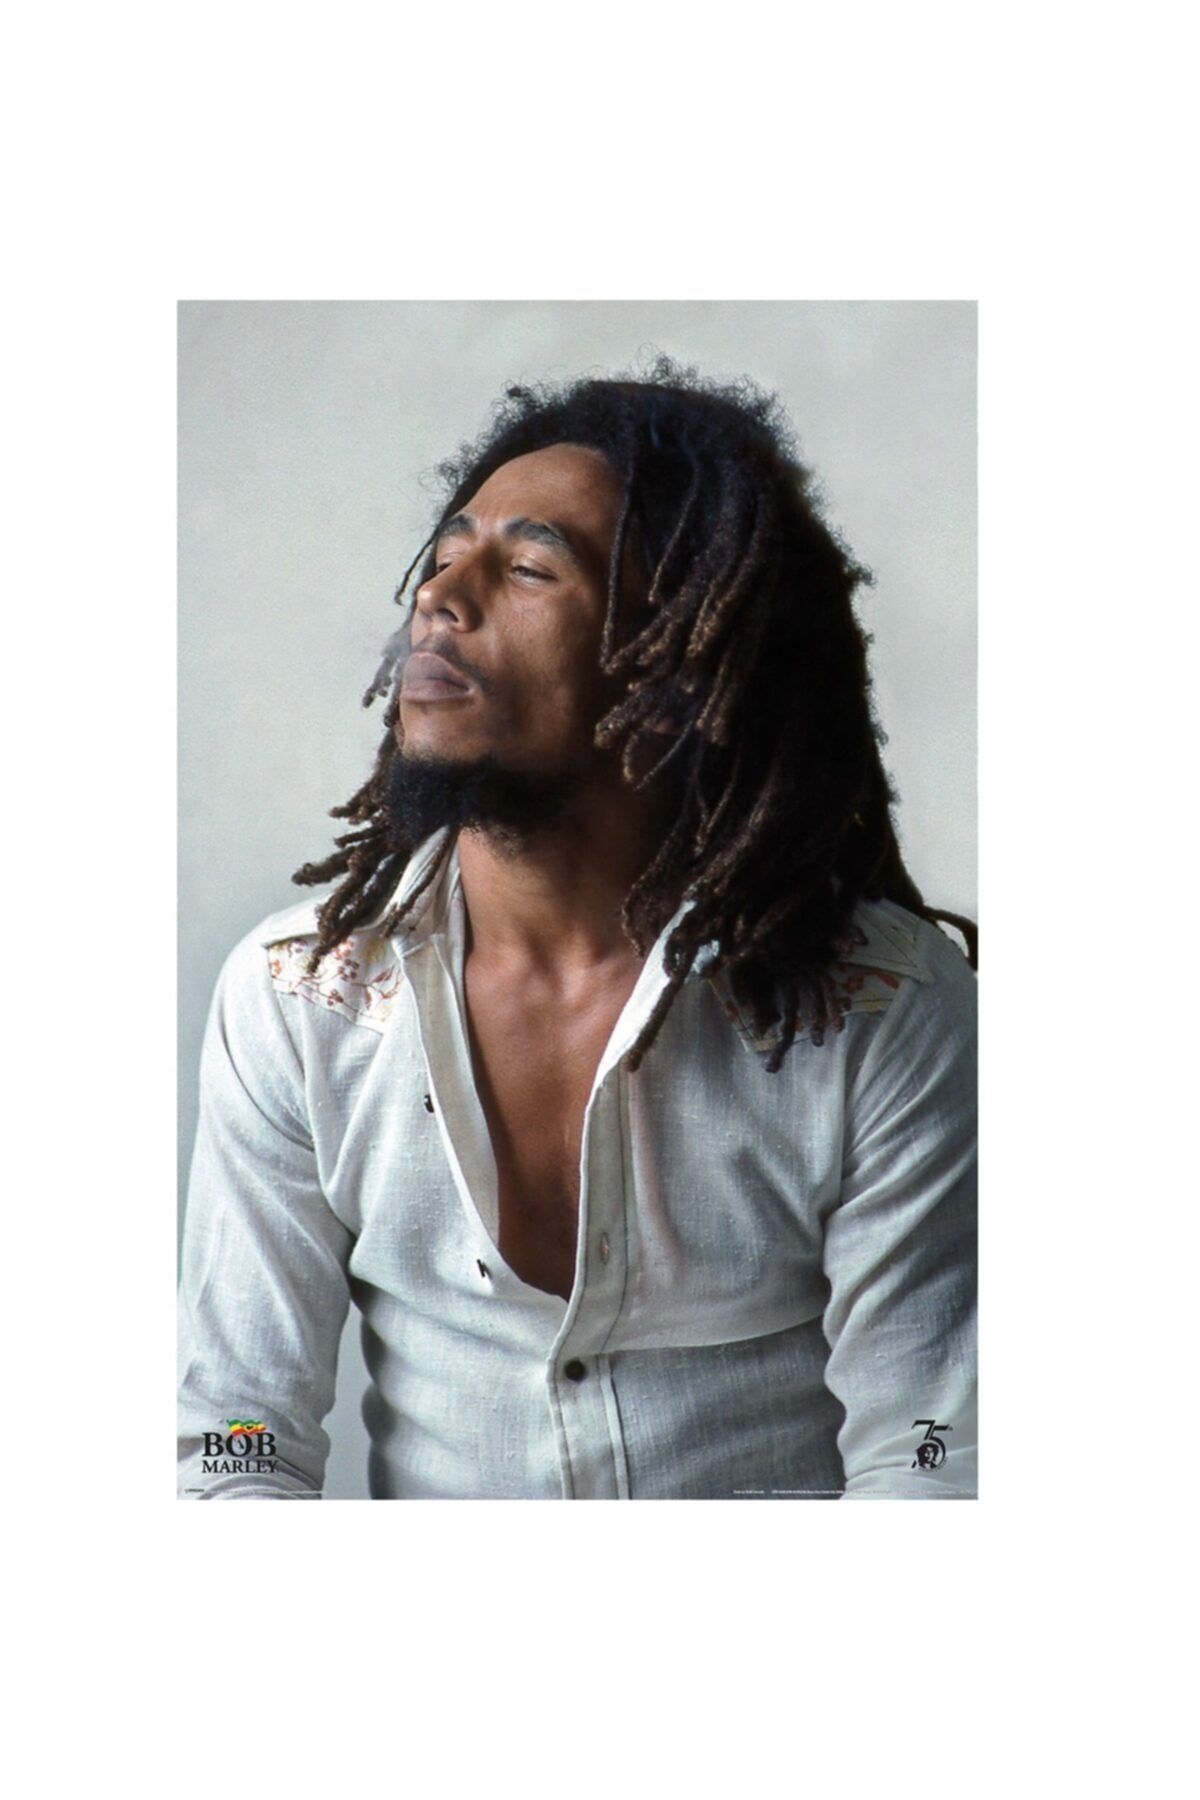 Pyramid International Maxi Poster Bob Marley (redemption)